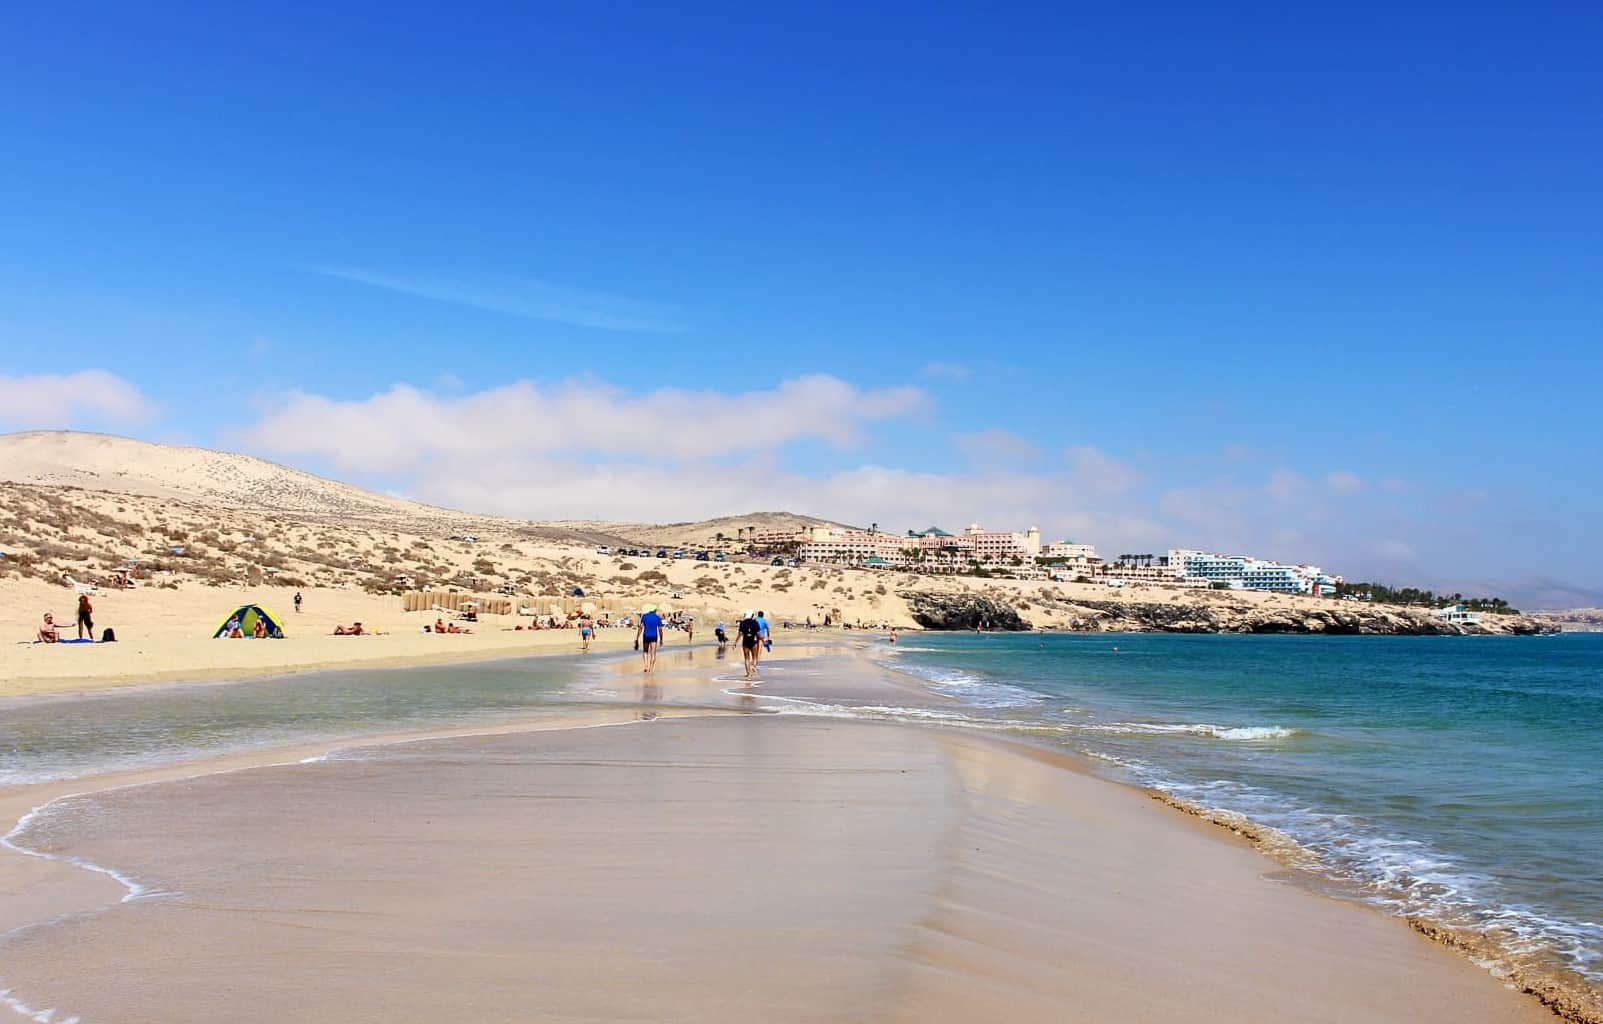 Esmeralda, Costa Calma Fuerteventura Canary Islands, Fuerteventura beaches